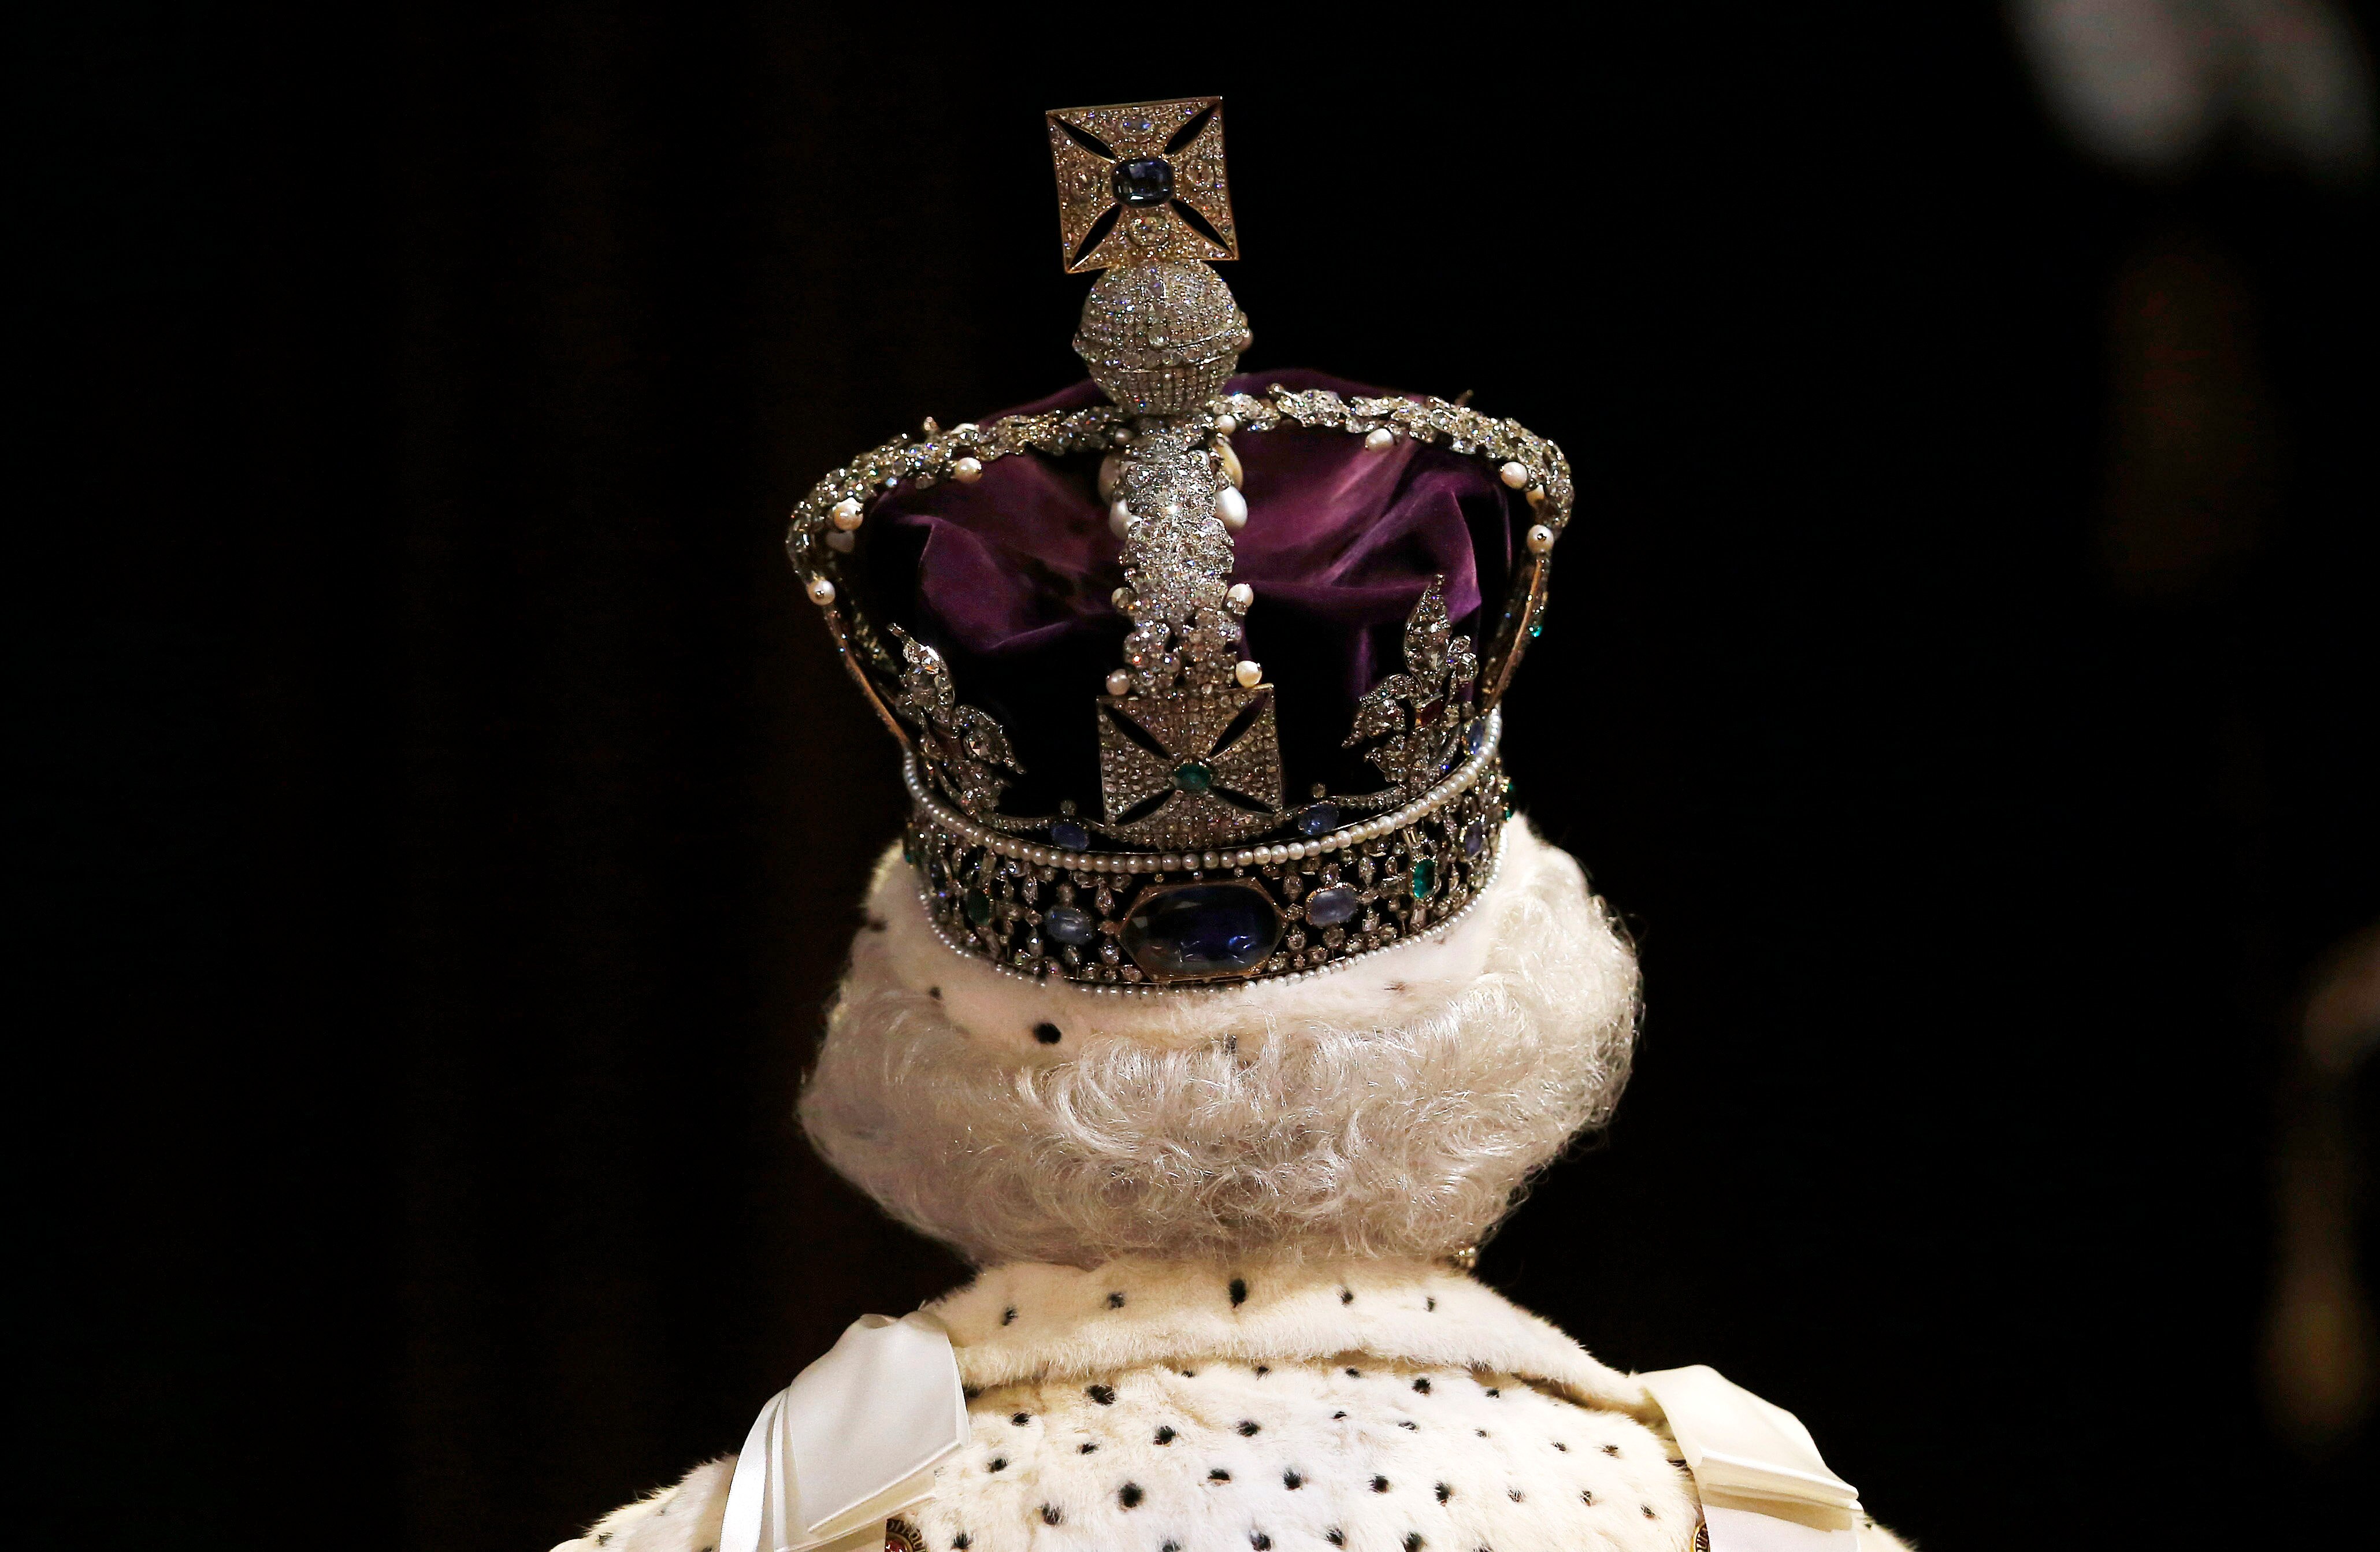 Was Queen Elizabeth a “political” figure?